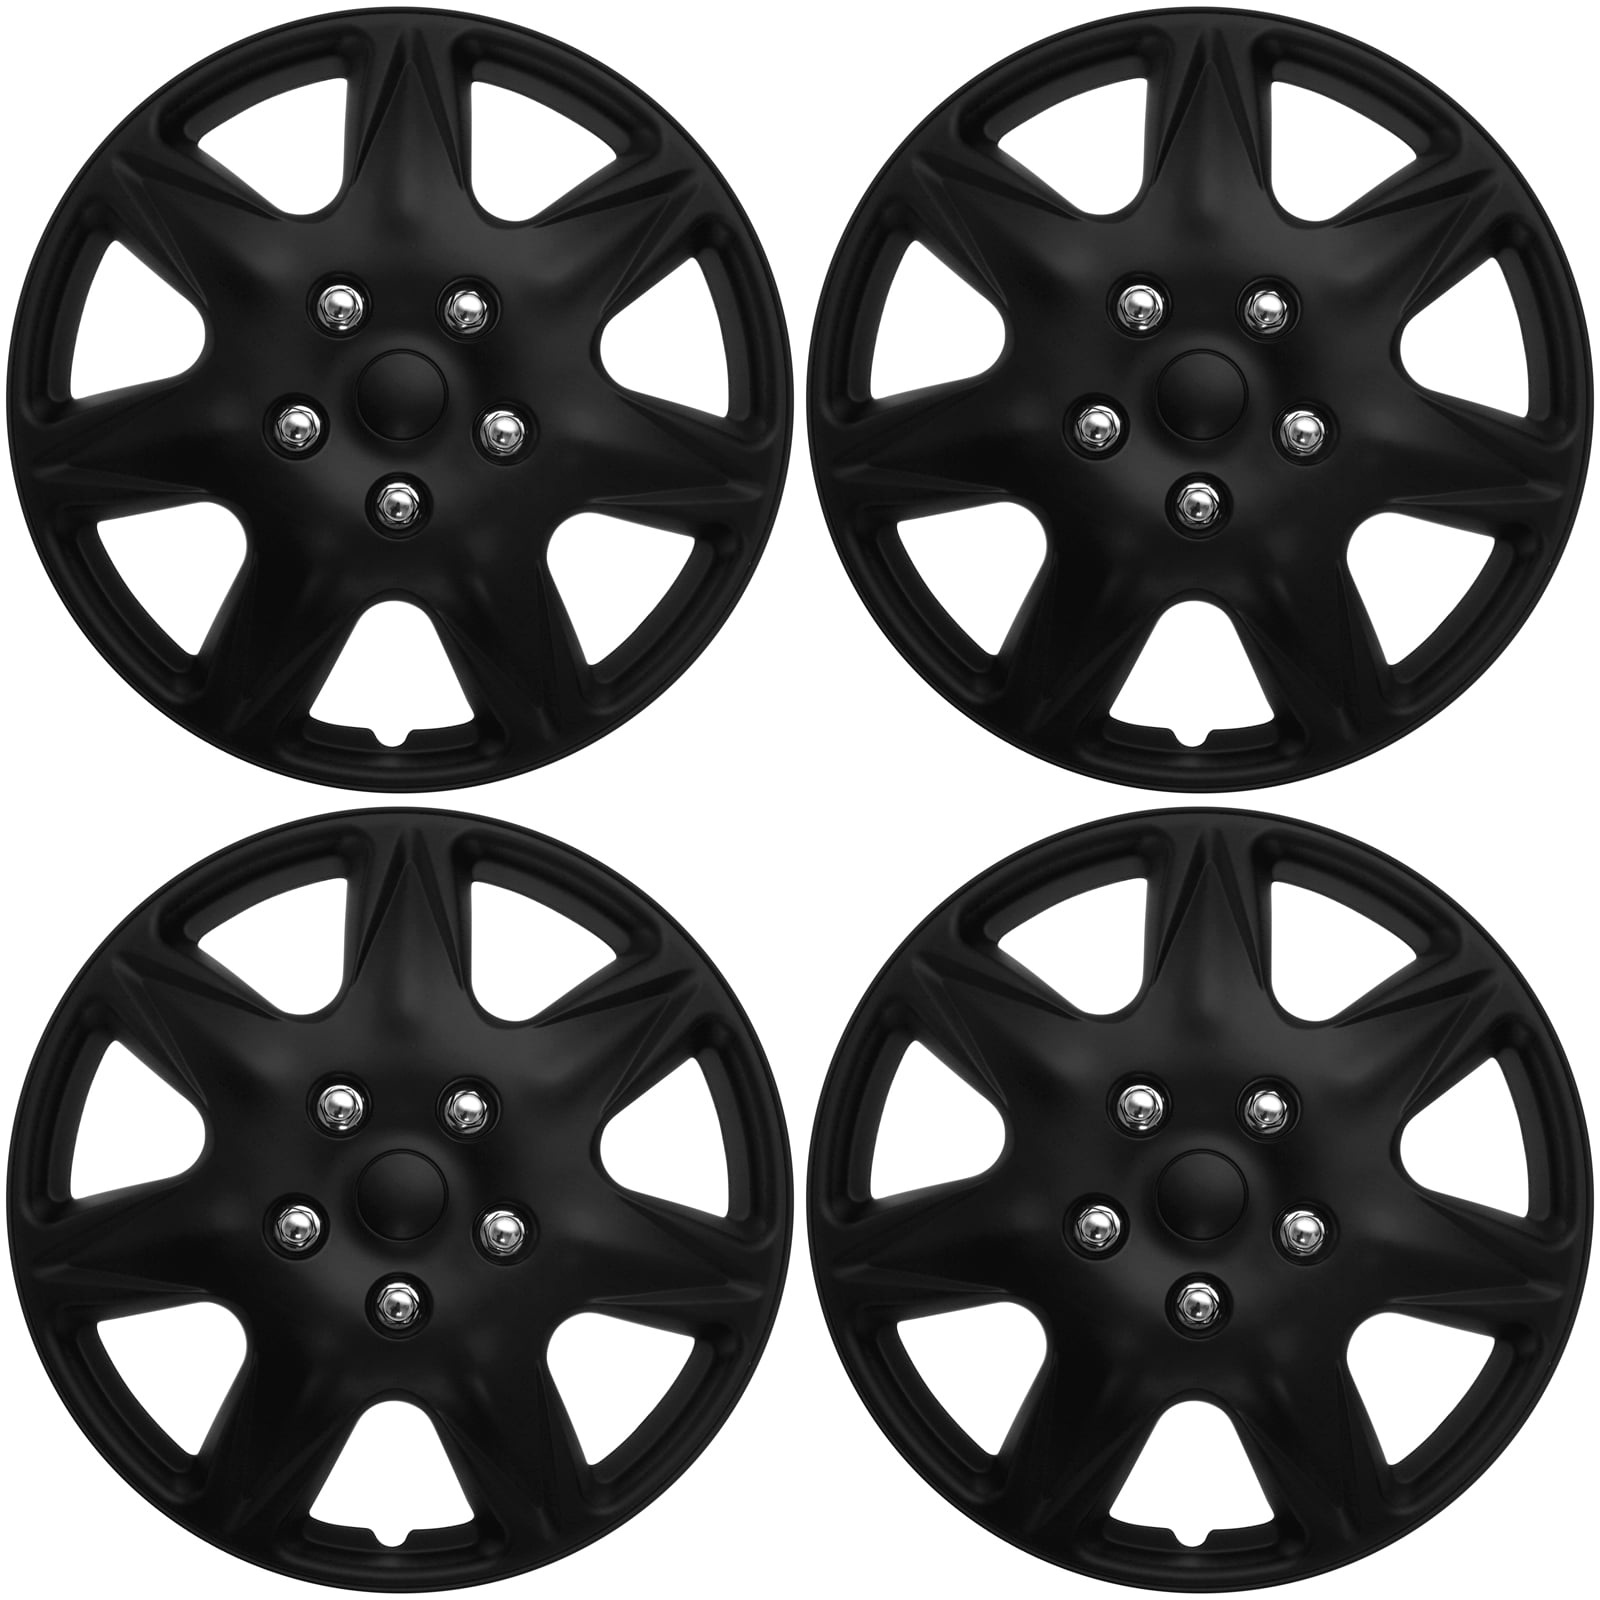 4 Pc Set of 16" Matte Black Hub Caps for OEM Steel Wheel Cover Center Cap Covers